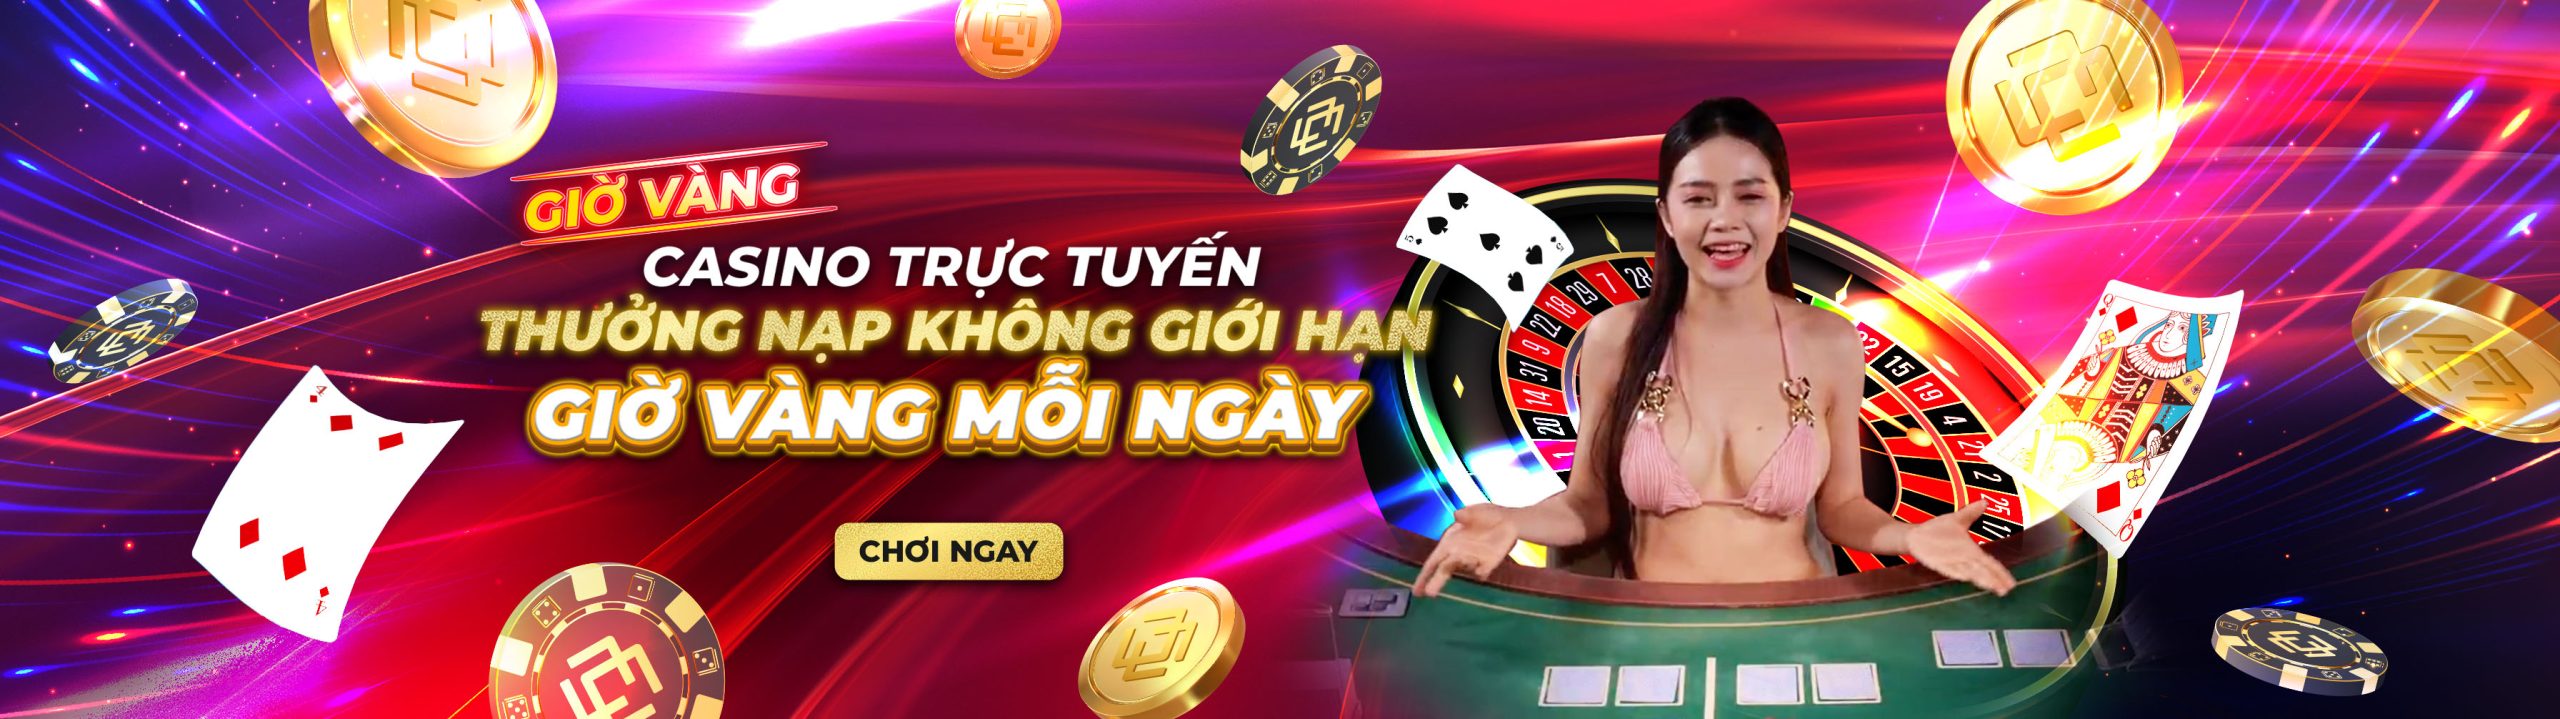 MCW-banner-casino